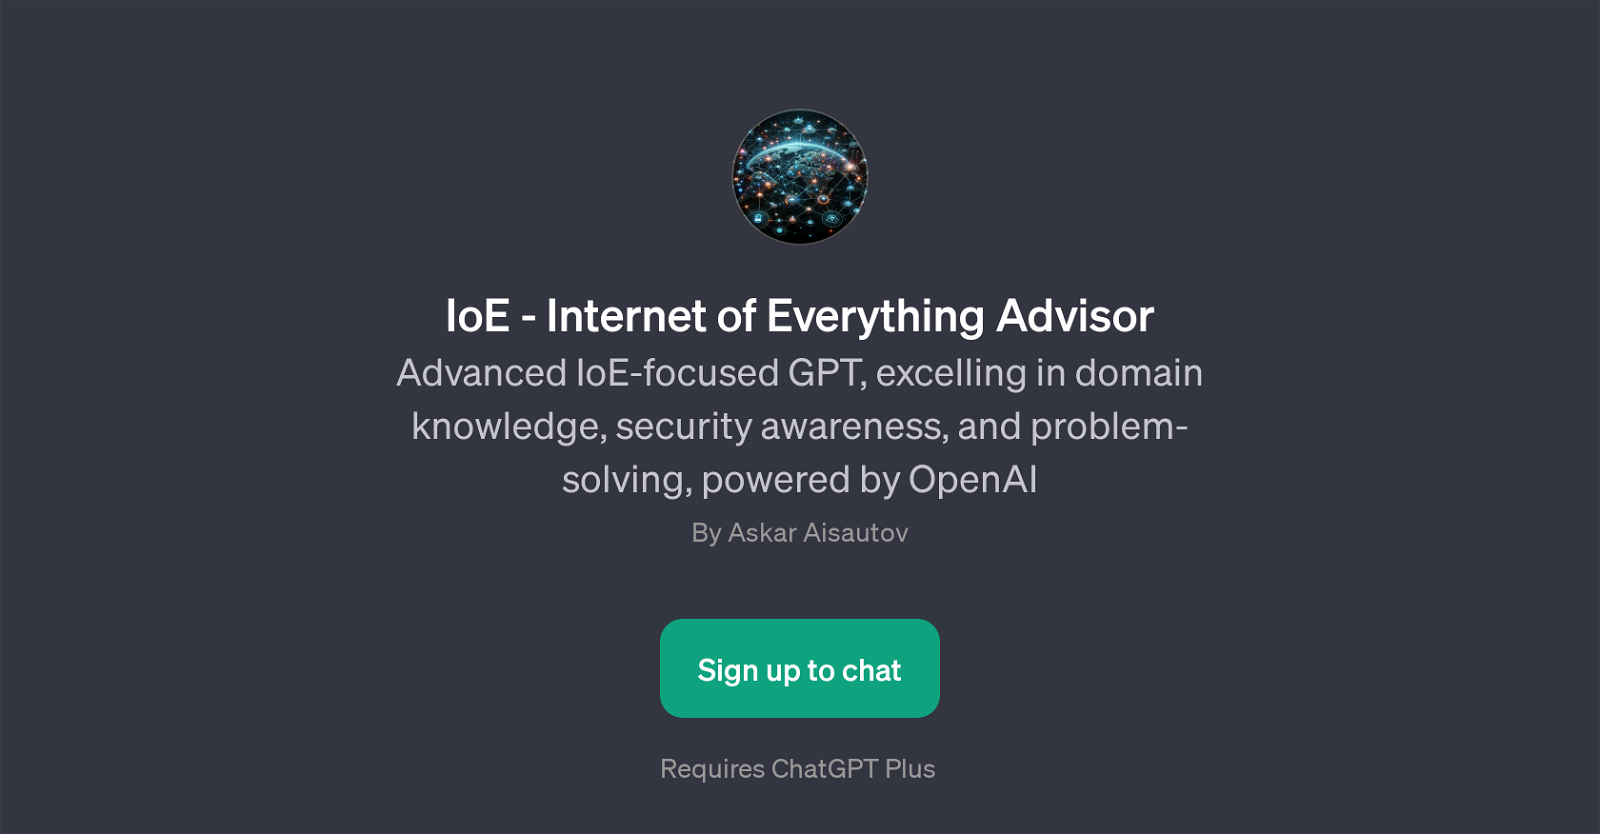 IoE - Internet of Everything Advisor website